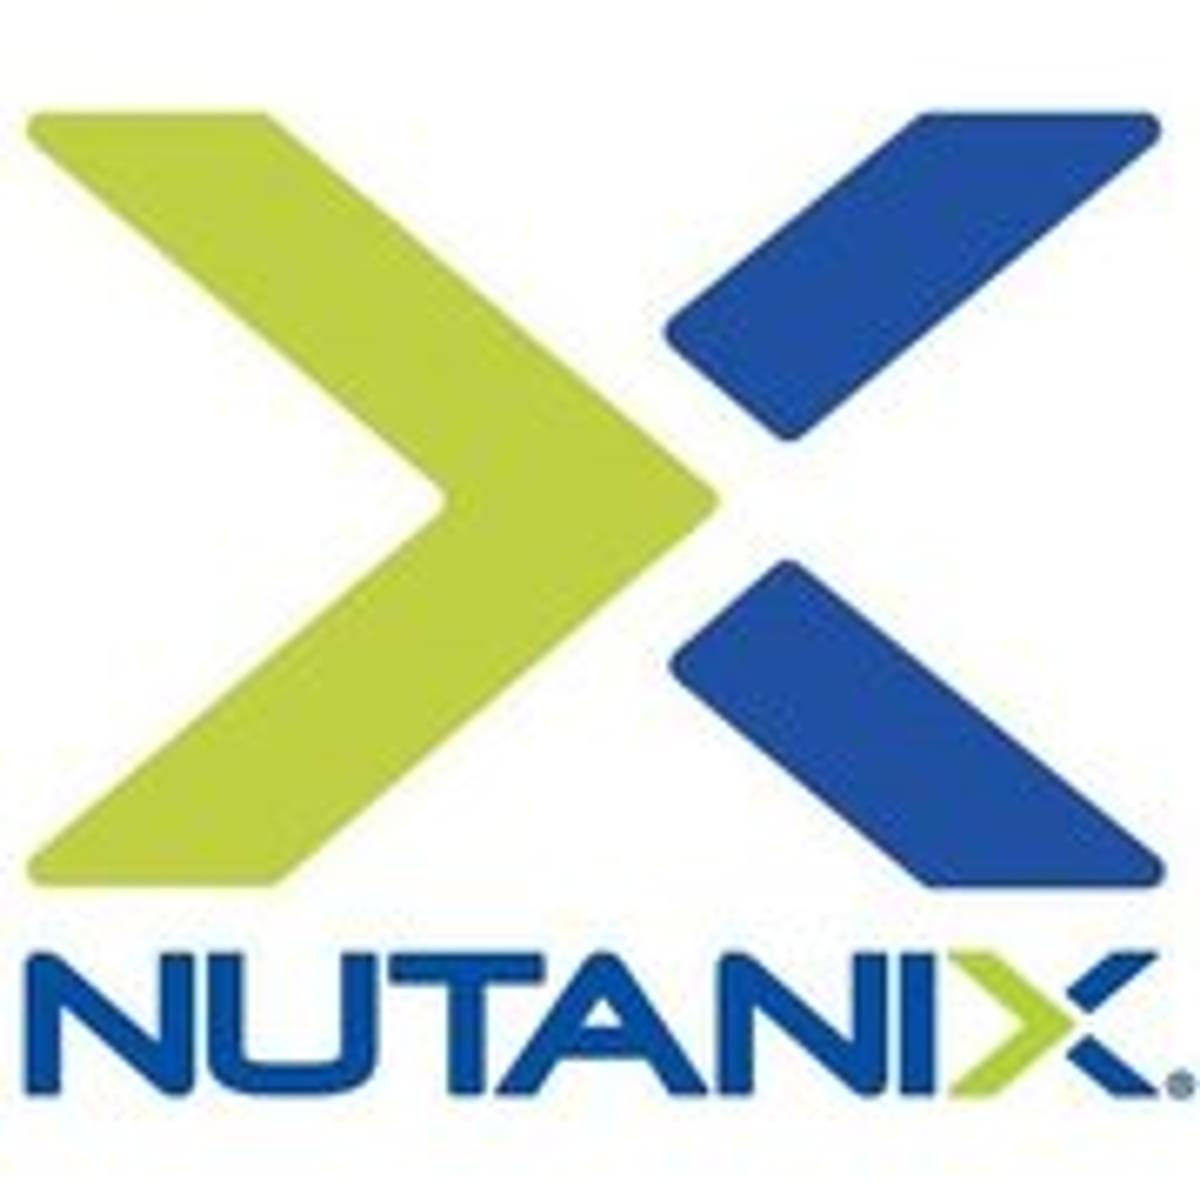 Nutanix kondigt nieuwe IT-automation aan voor private clouds image